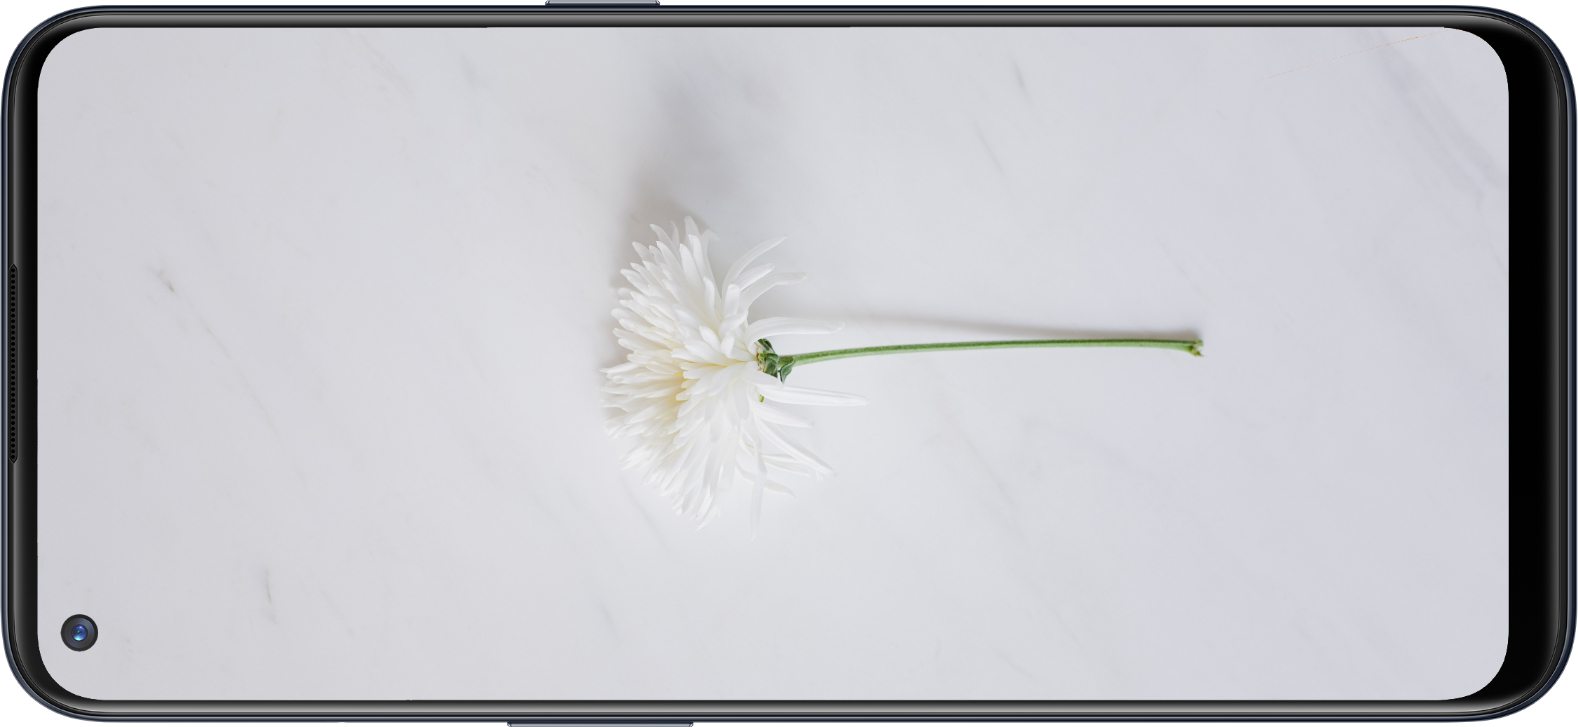 OnePlus Nord N200 5G display. Photo: OnePlus